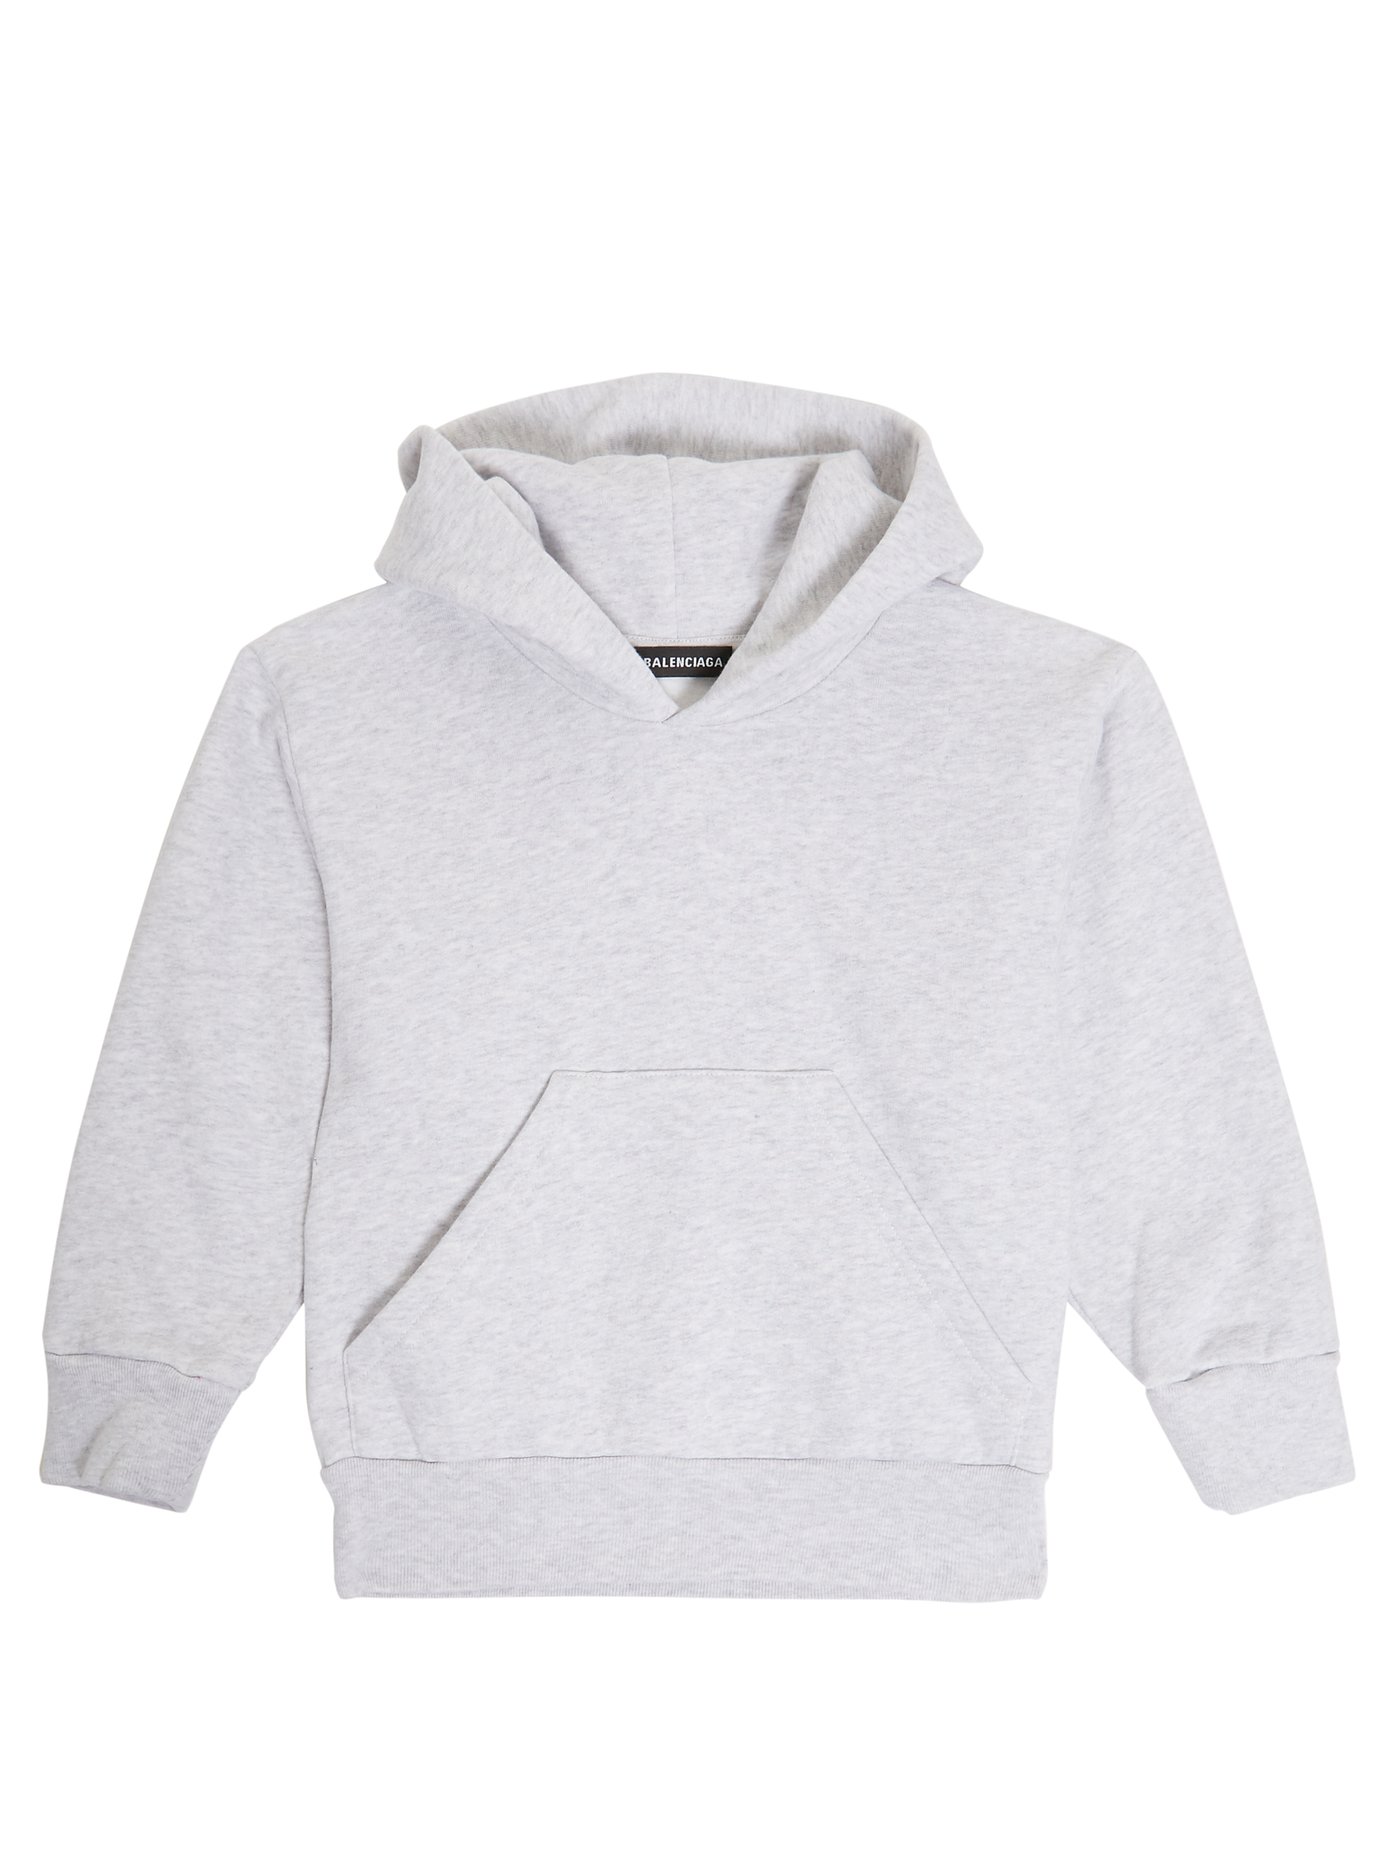 Unisex cotton-blend hooded sweatshirt 